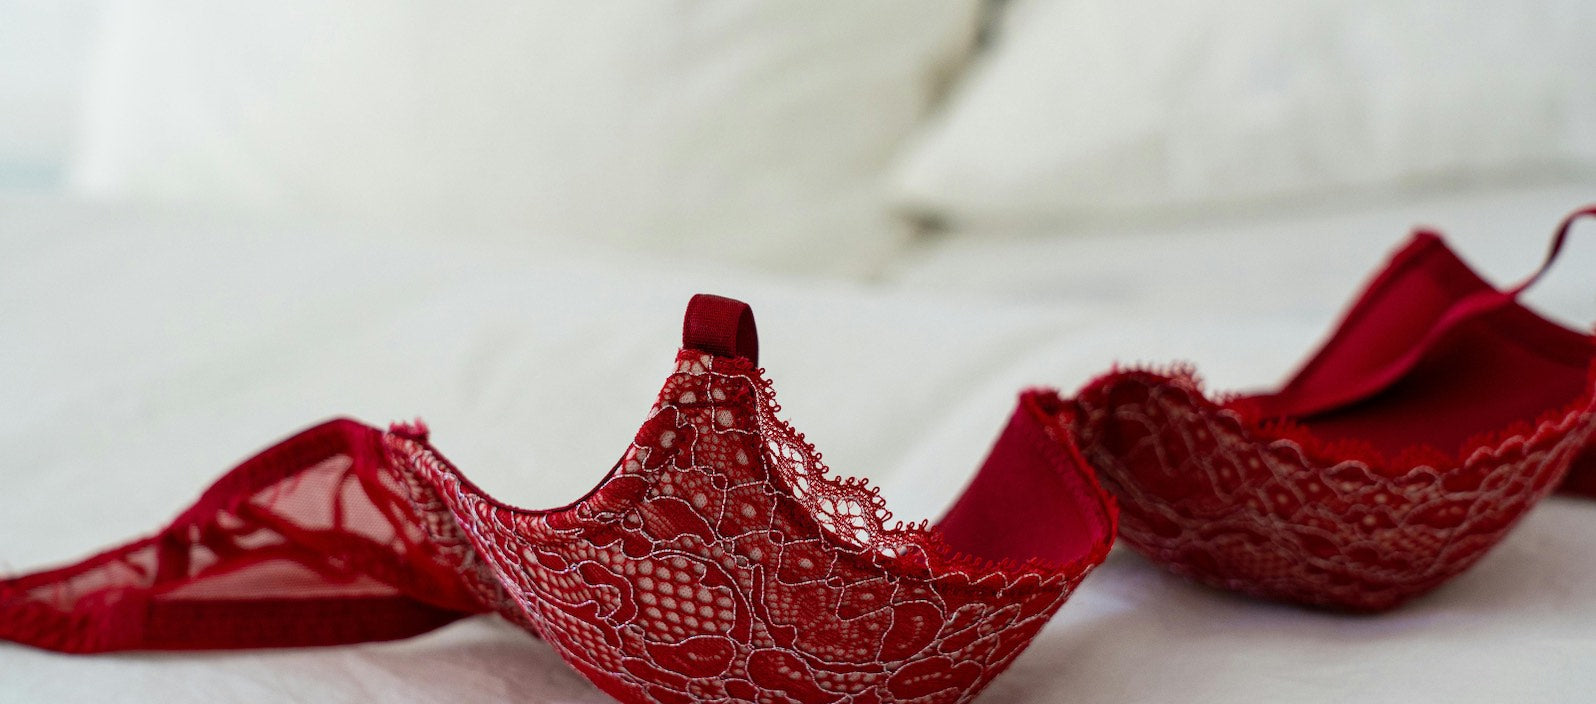 Should You Ditch Your Bras & Panties?